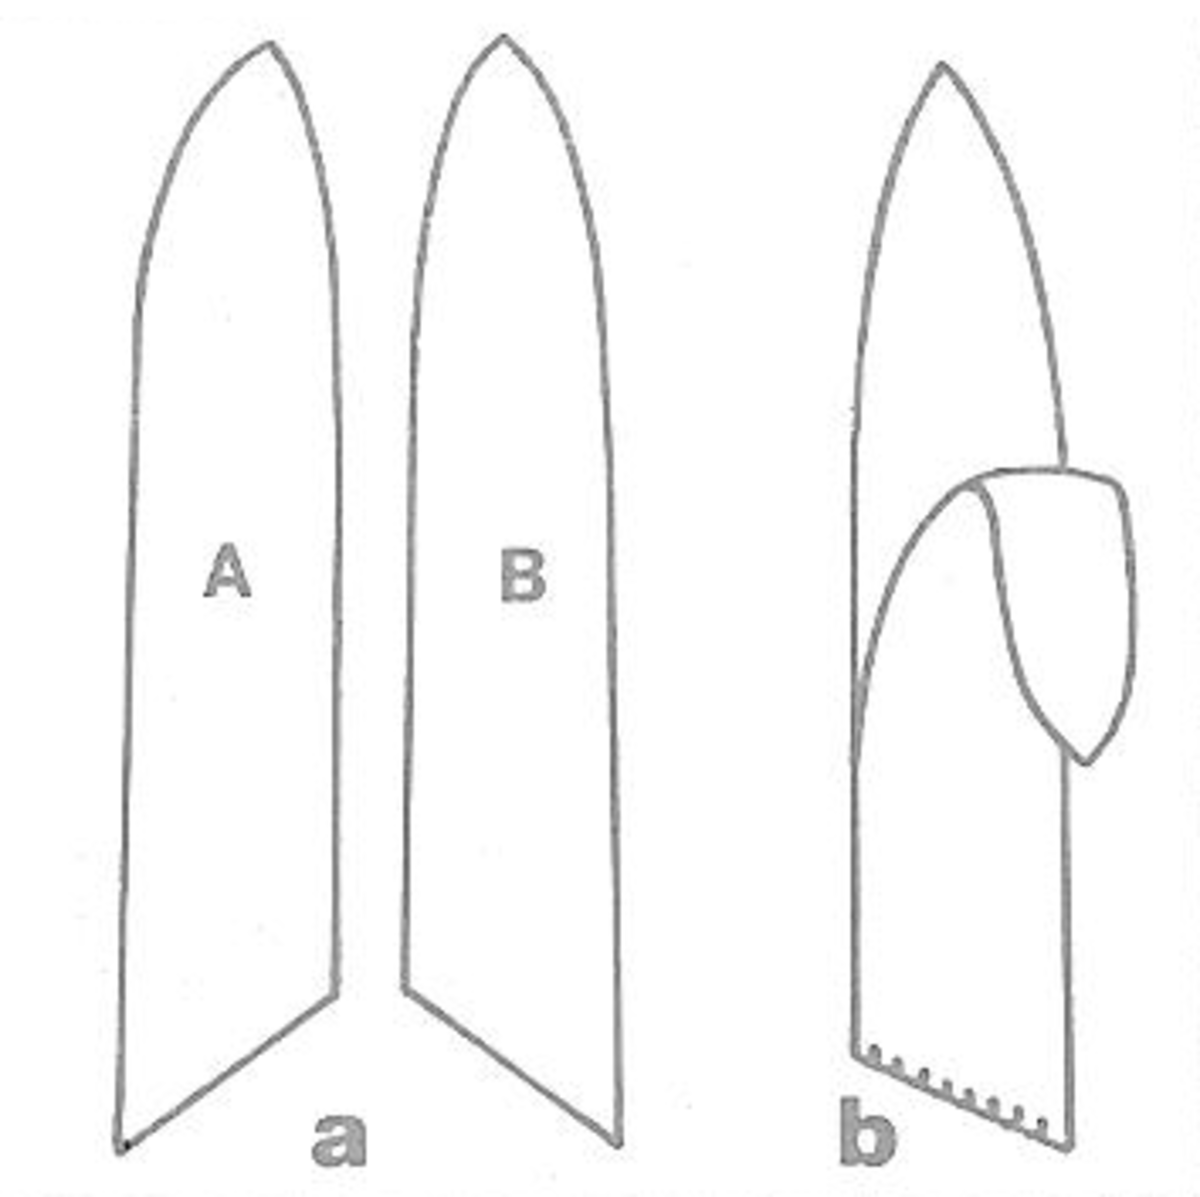 Figure 3: The Fourchettes